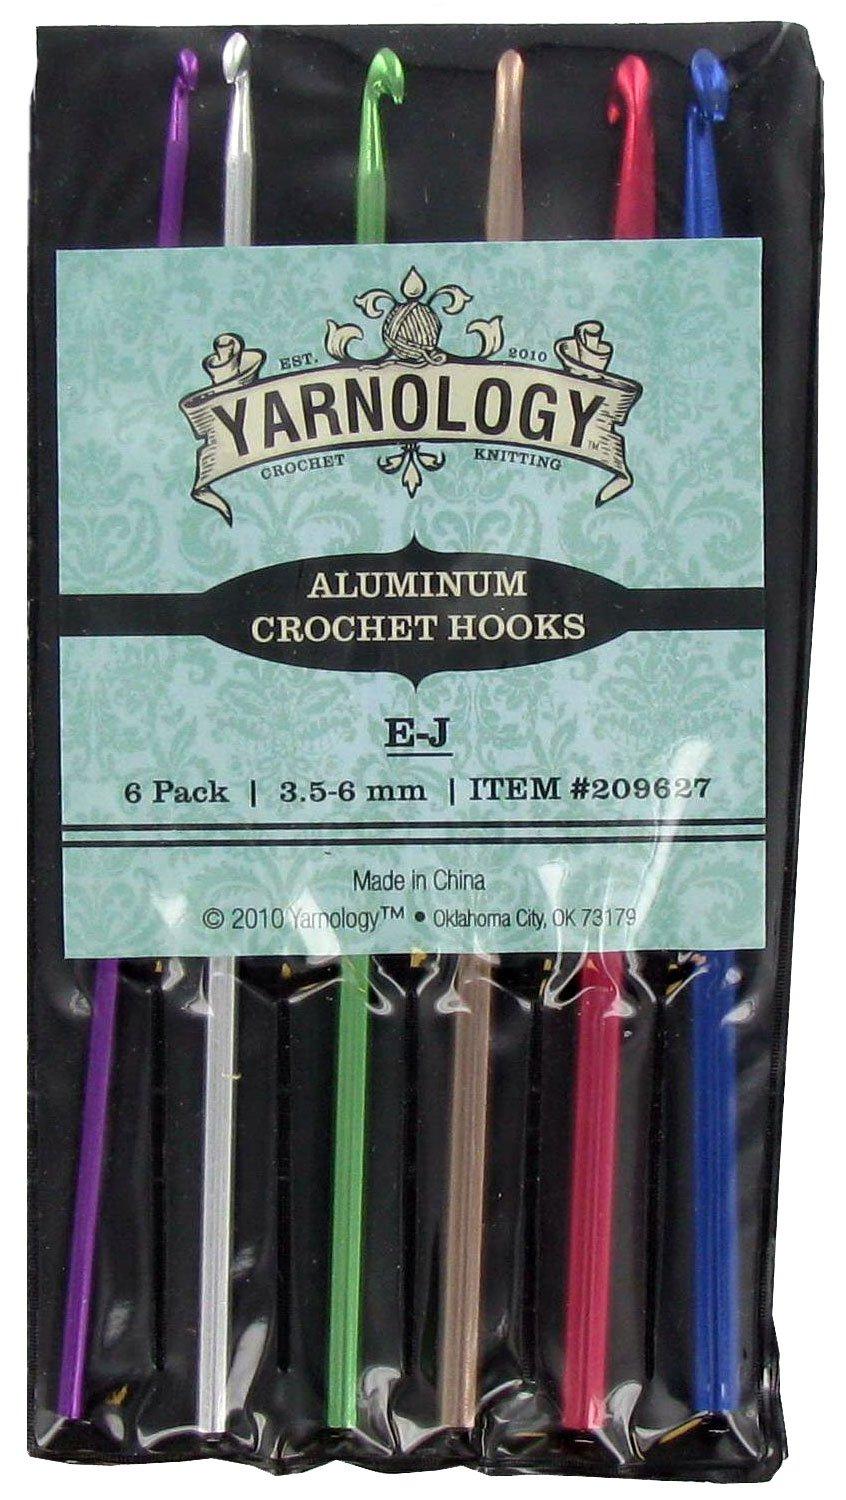 Yarnology 8 Piece Crochet Hook Set - Aluminum 3.25-6.5mm Hooks